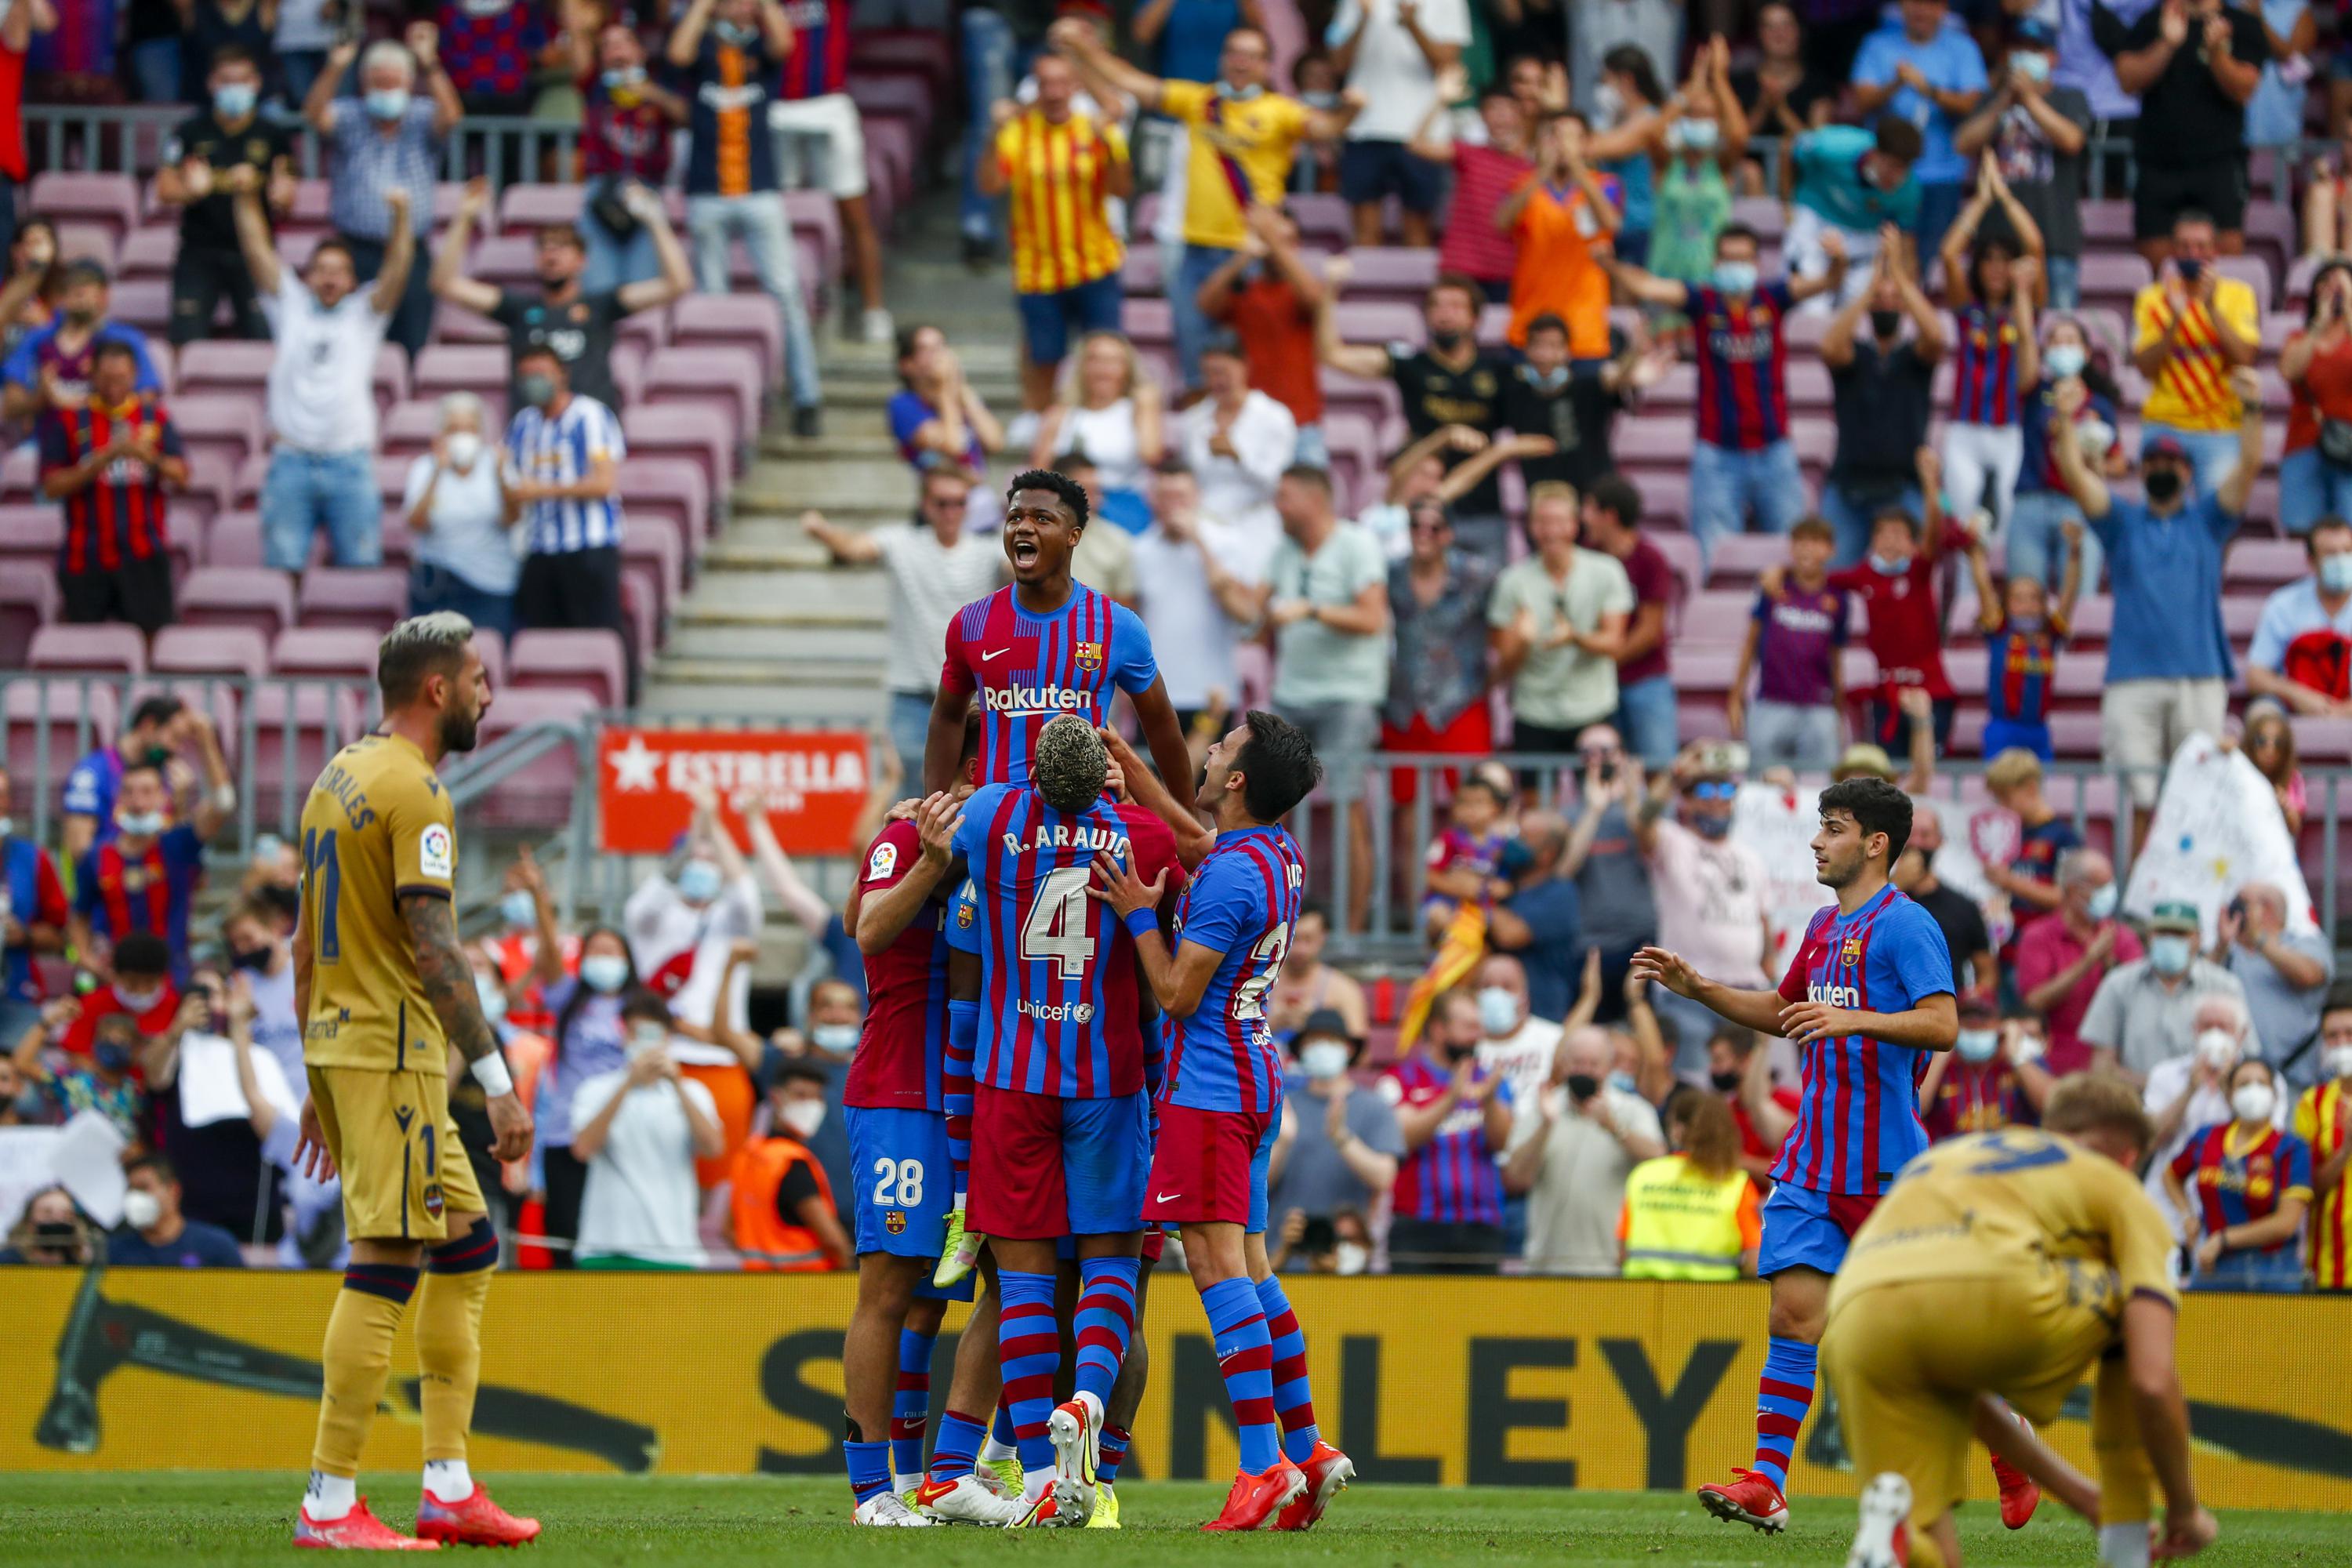  Barcelona players celebrate a goal against Levante despite the club's financial struggles.